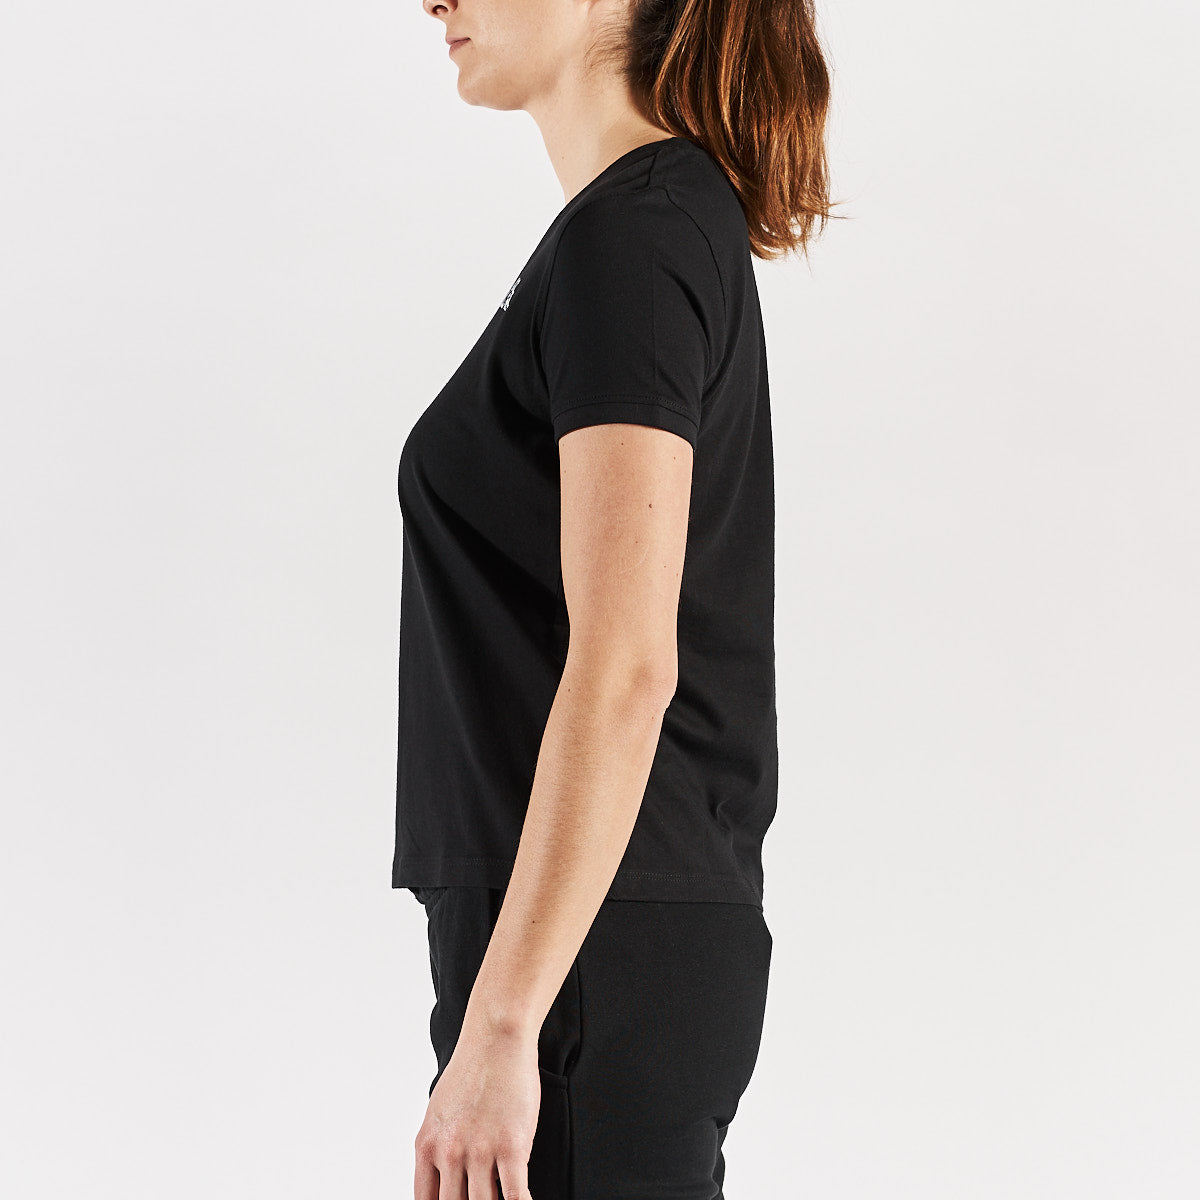 Camiseta Negra Cabou Mujer - imagen 2